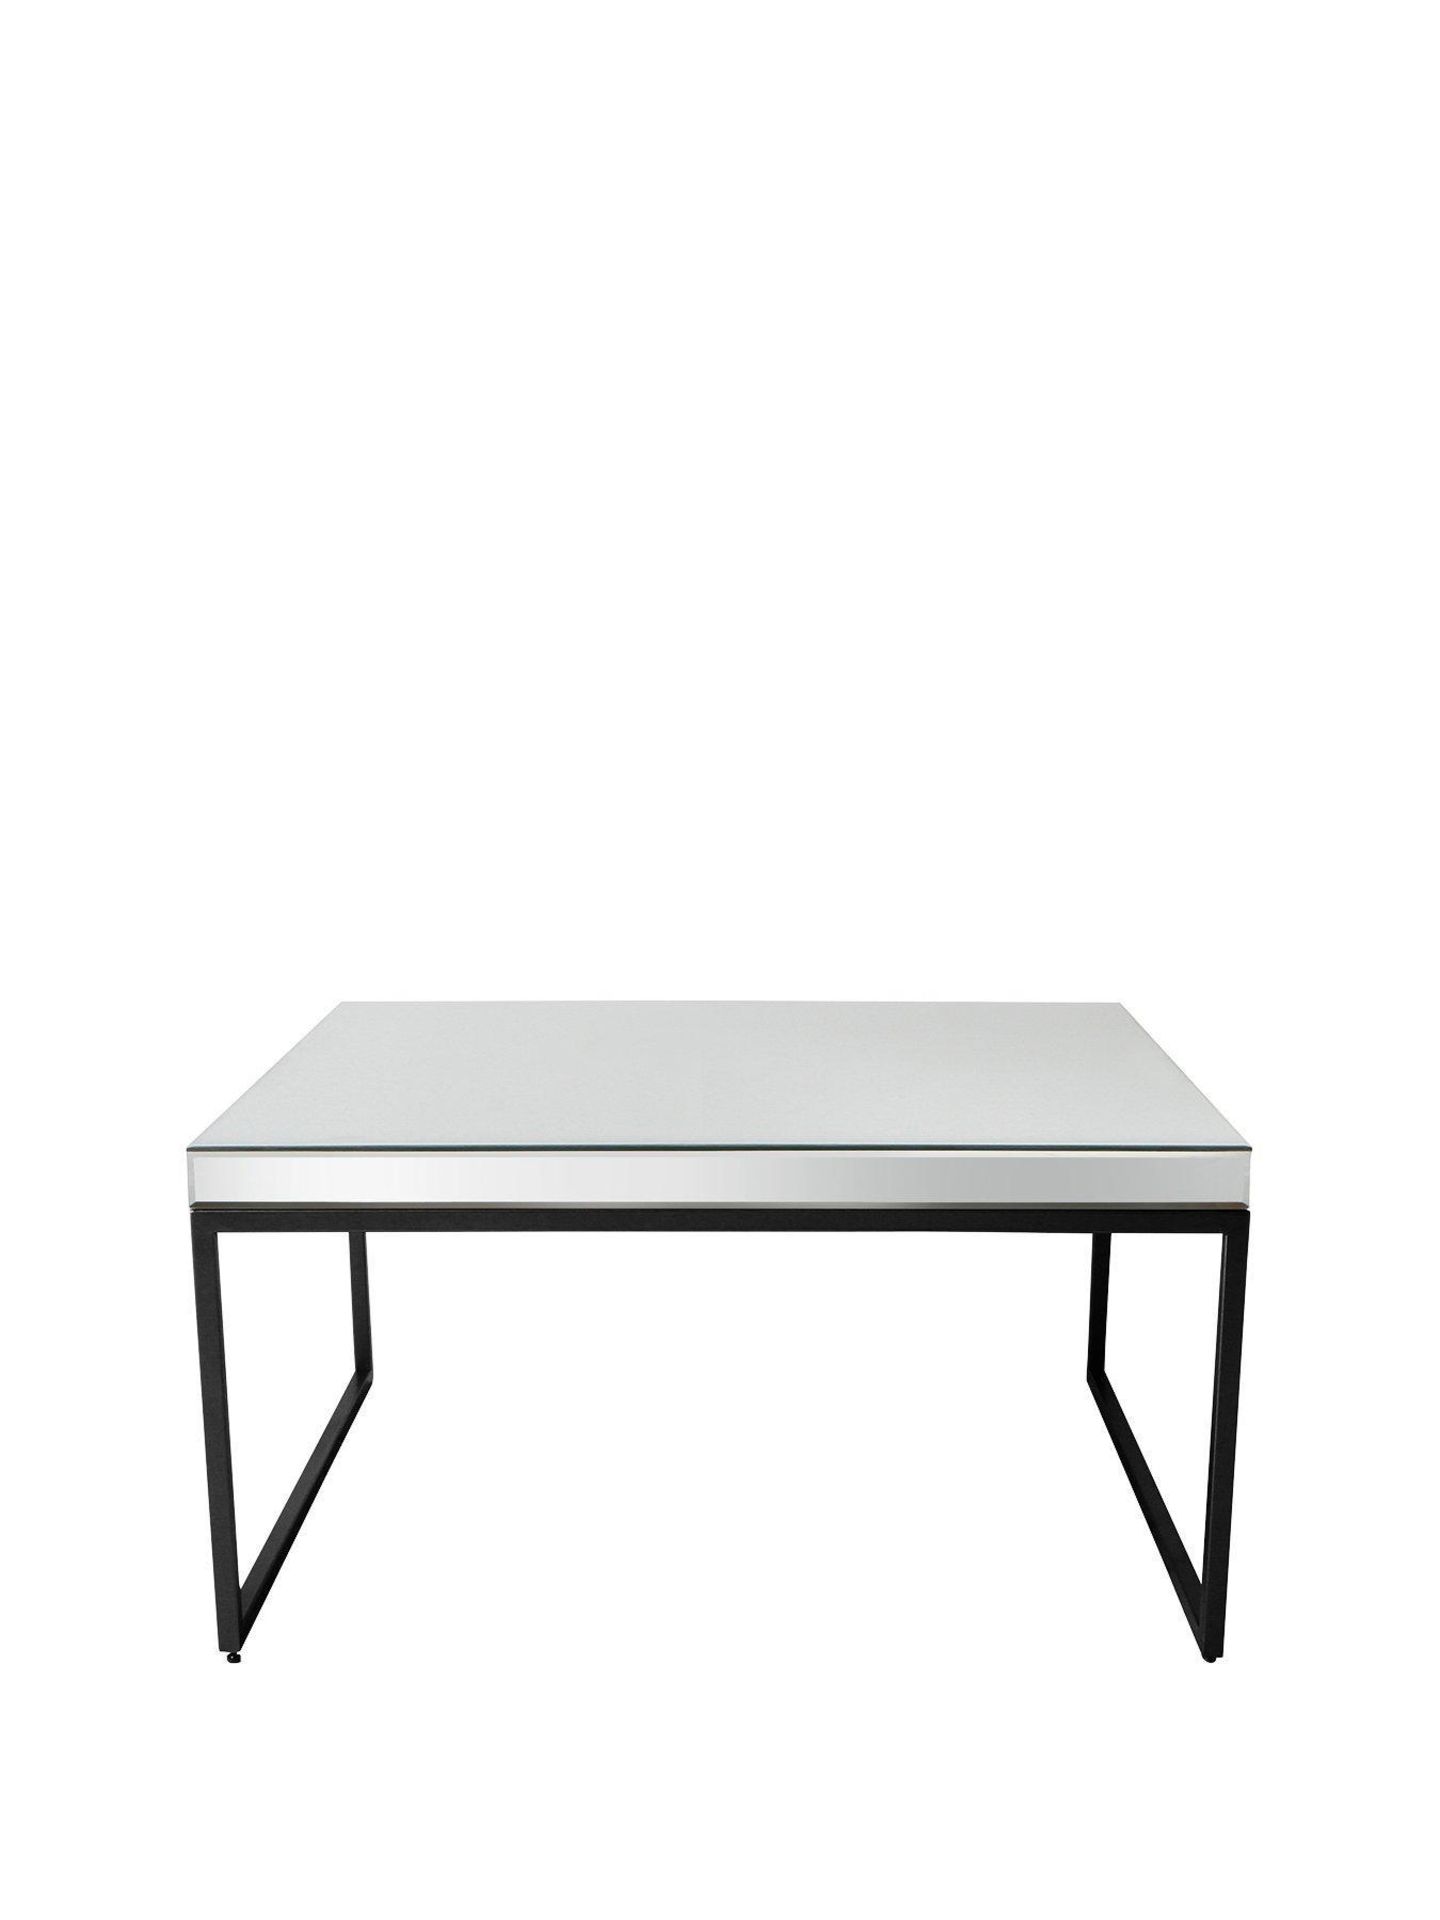 hudson living pippard coffee table [black/mirrored] 46x90x90cm rrp: £598.0